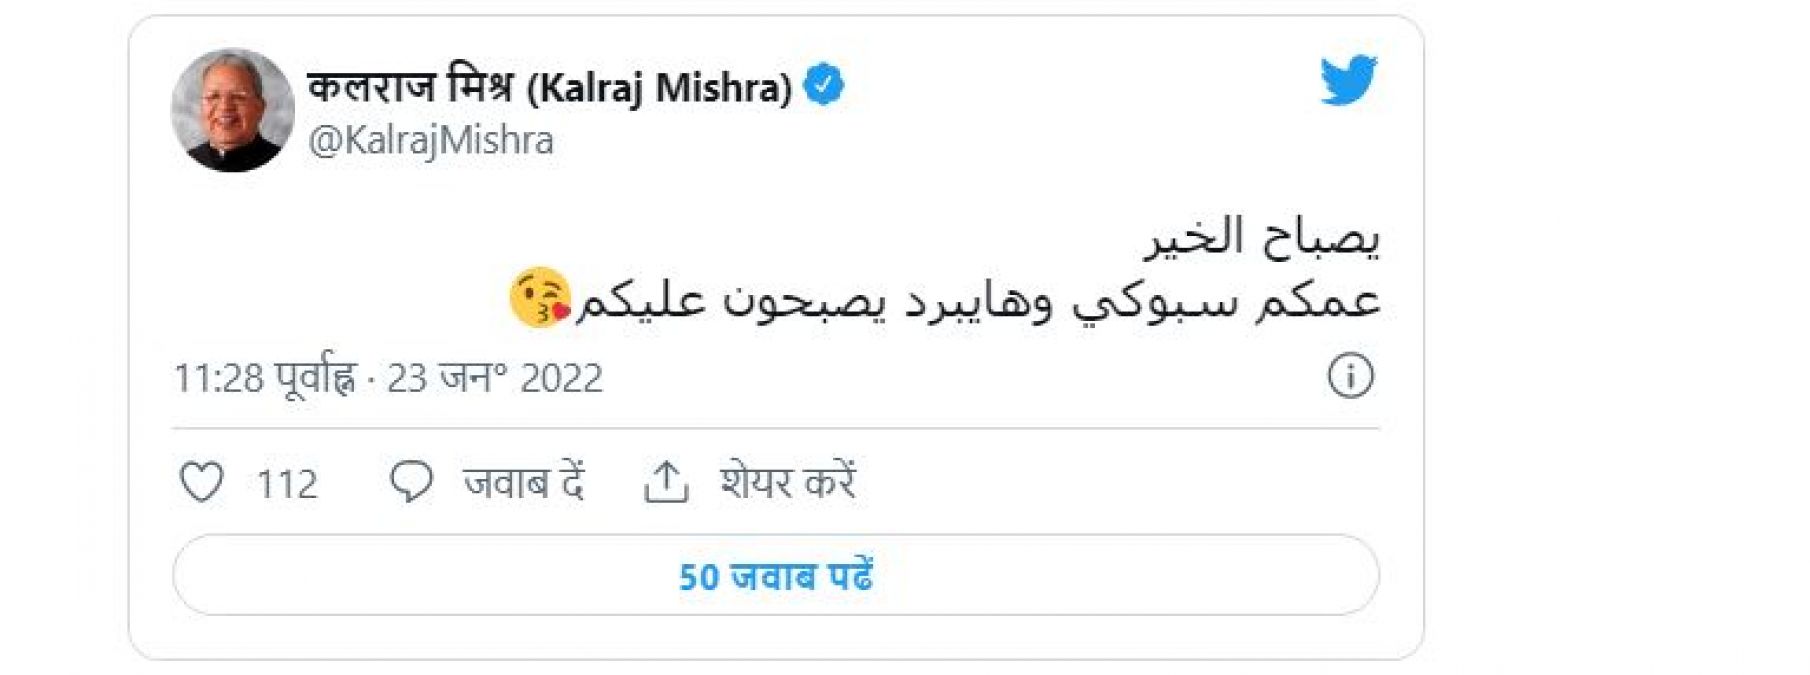 Rajasthan Governor Kalraj Mishra's Twitter account hacked, tweeted in Arabic